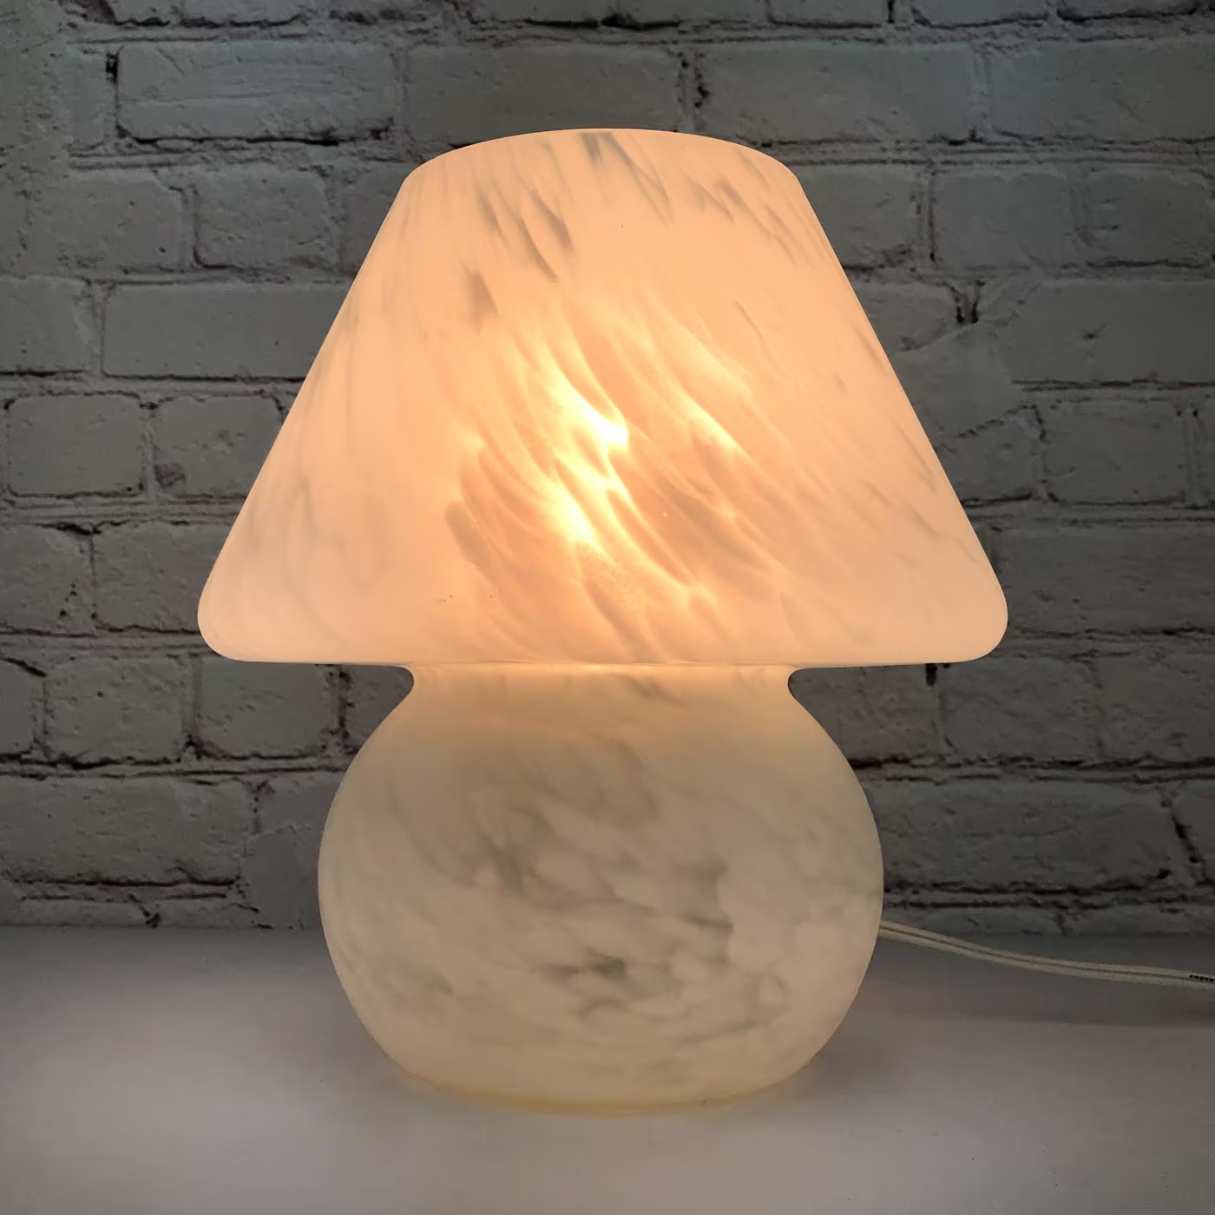 How To Make A Mushroom Lamp